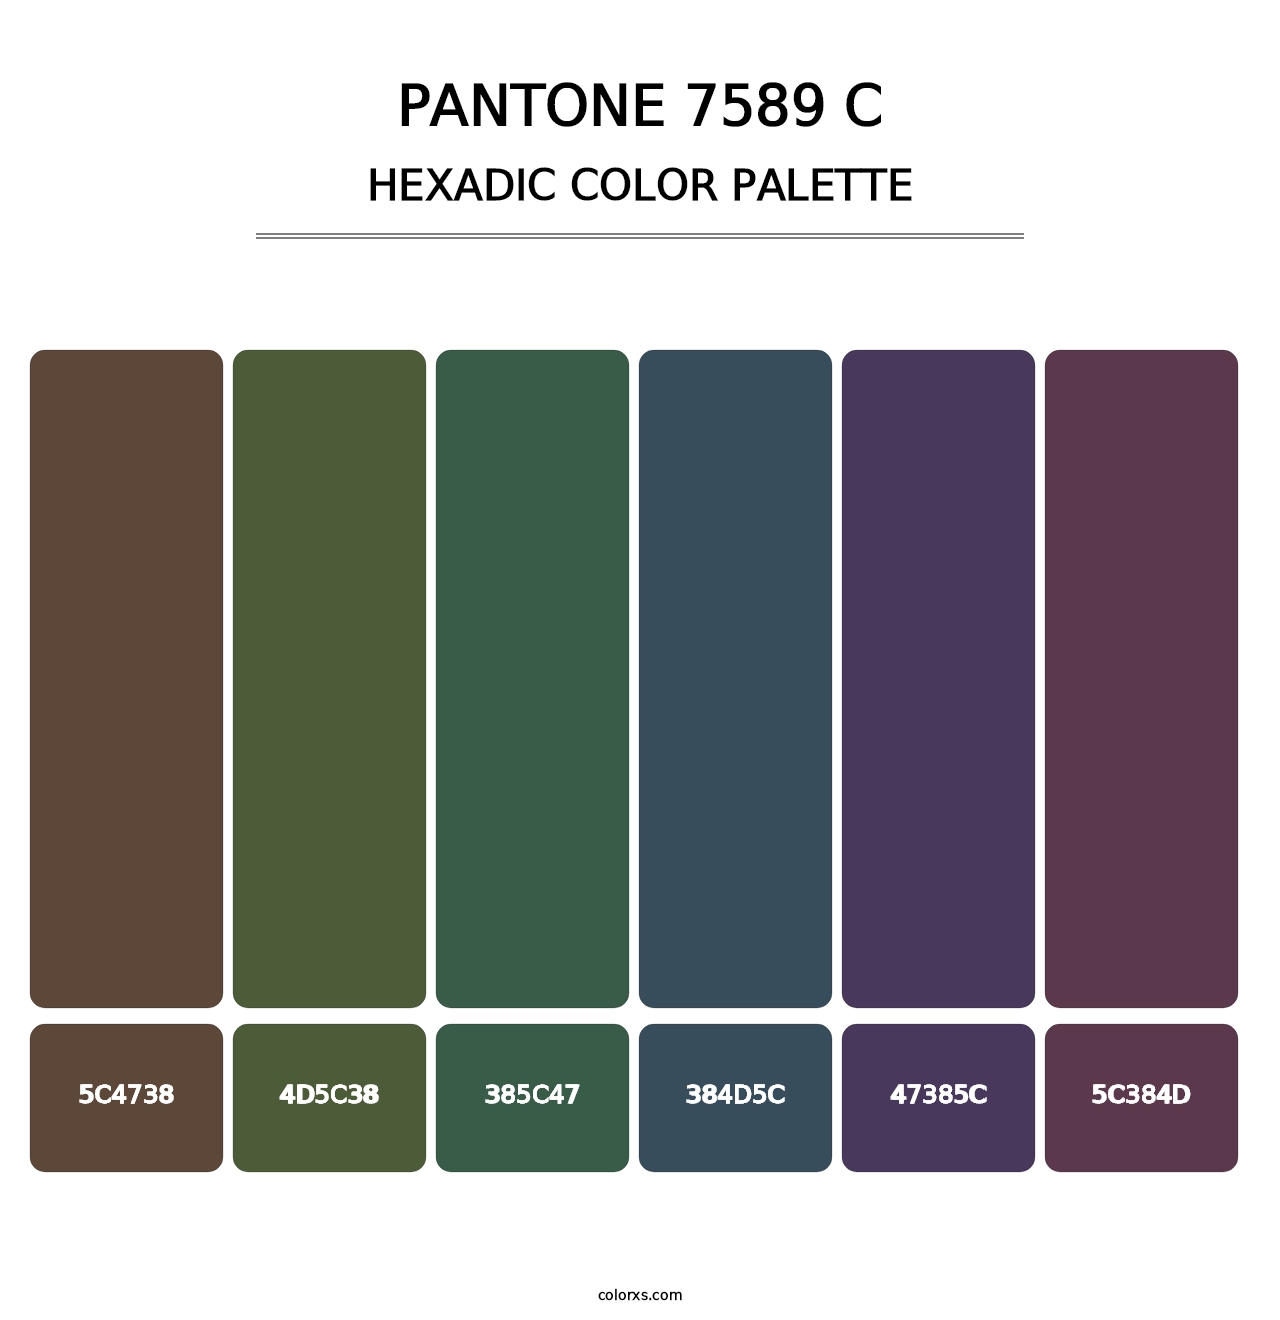 PANTONE 7589 C - Hexadic Color Palette